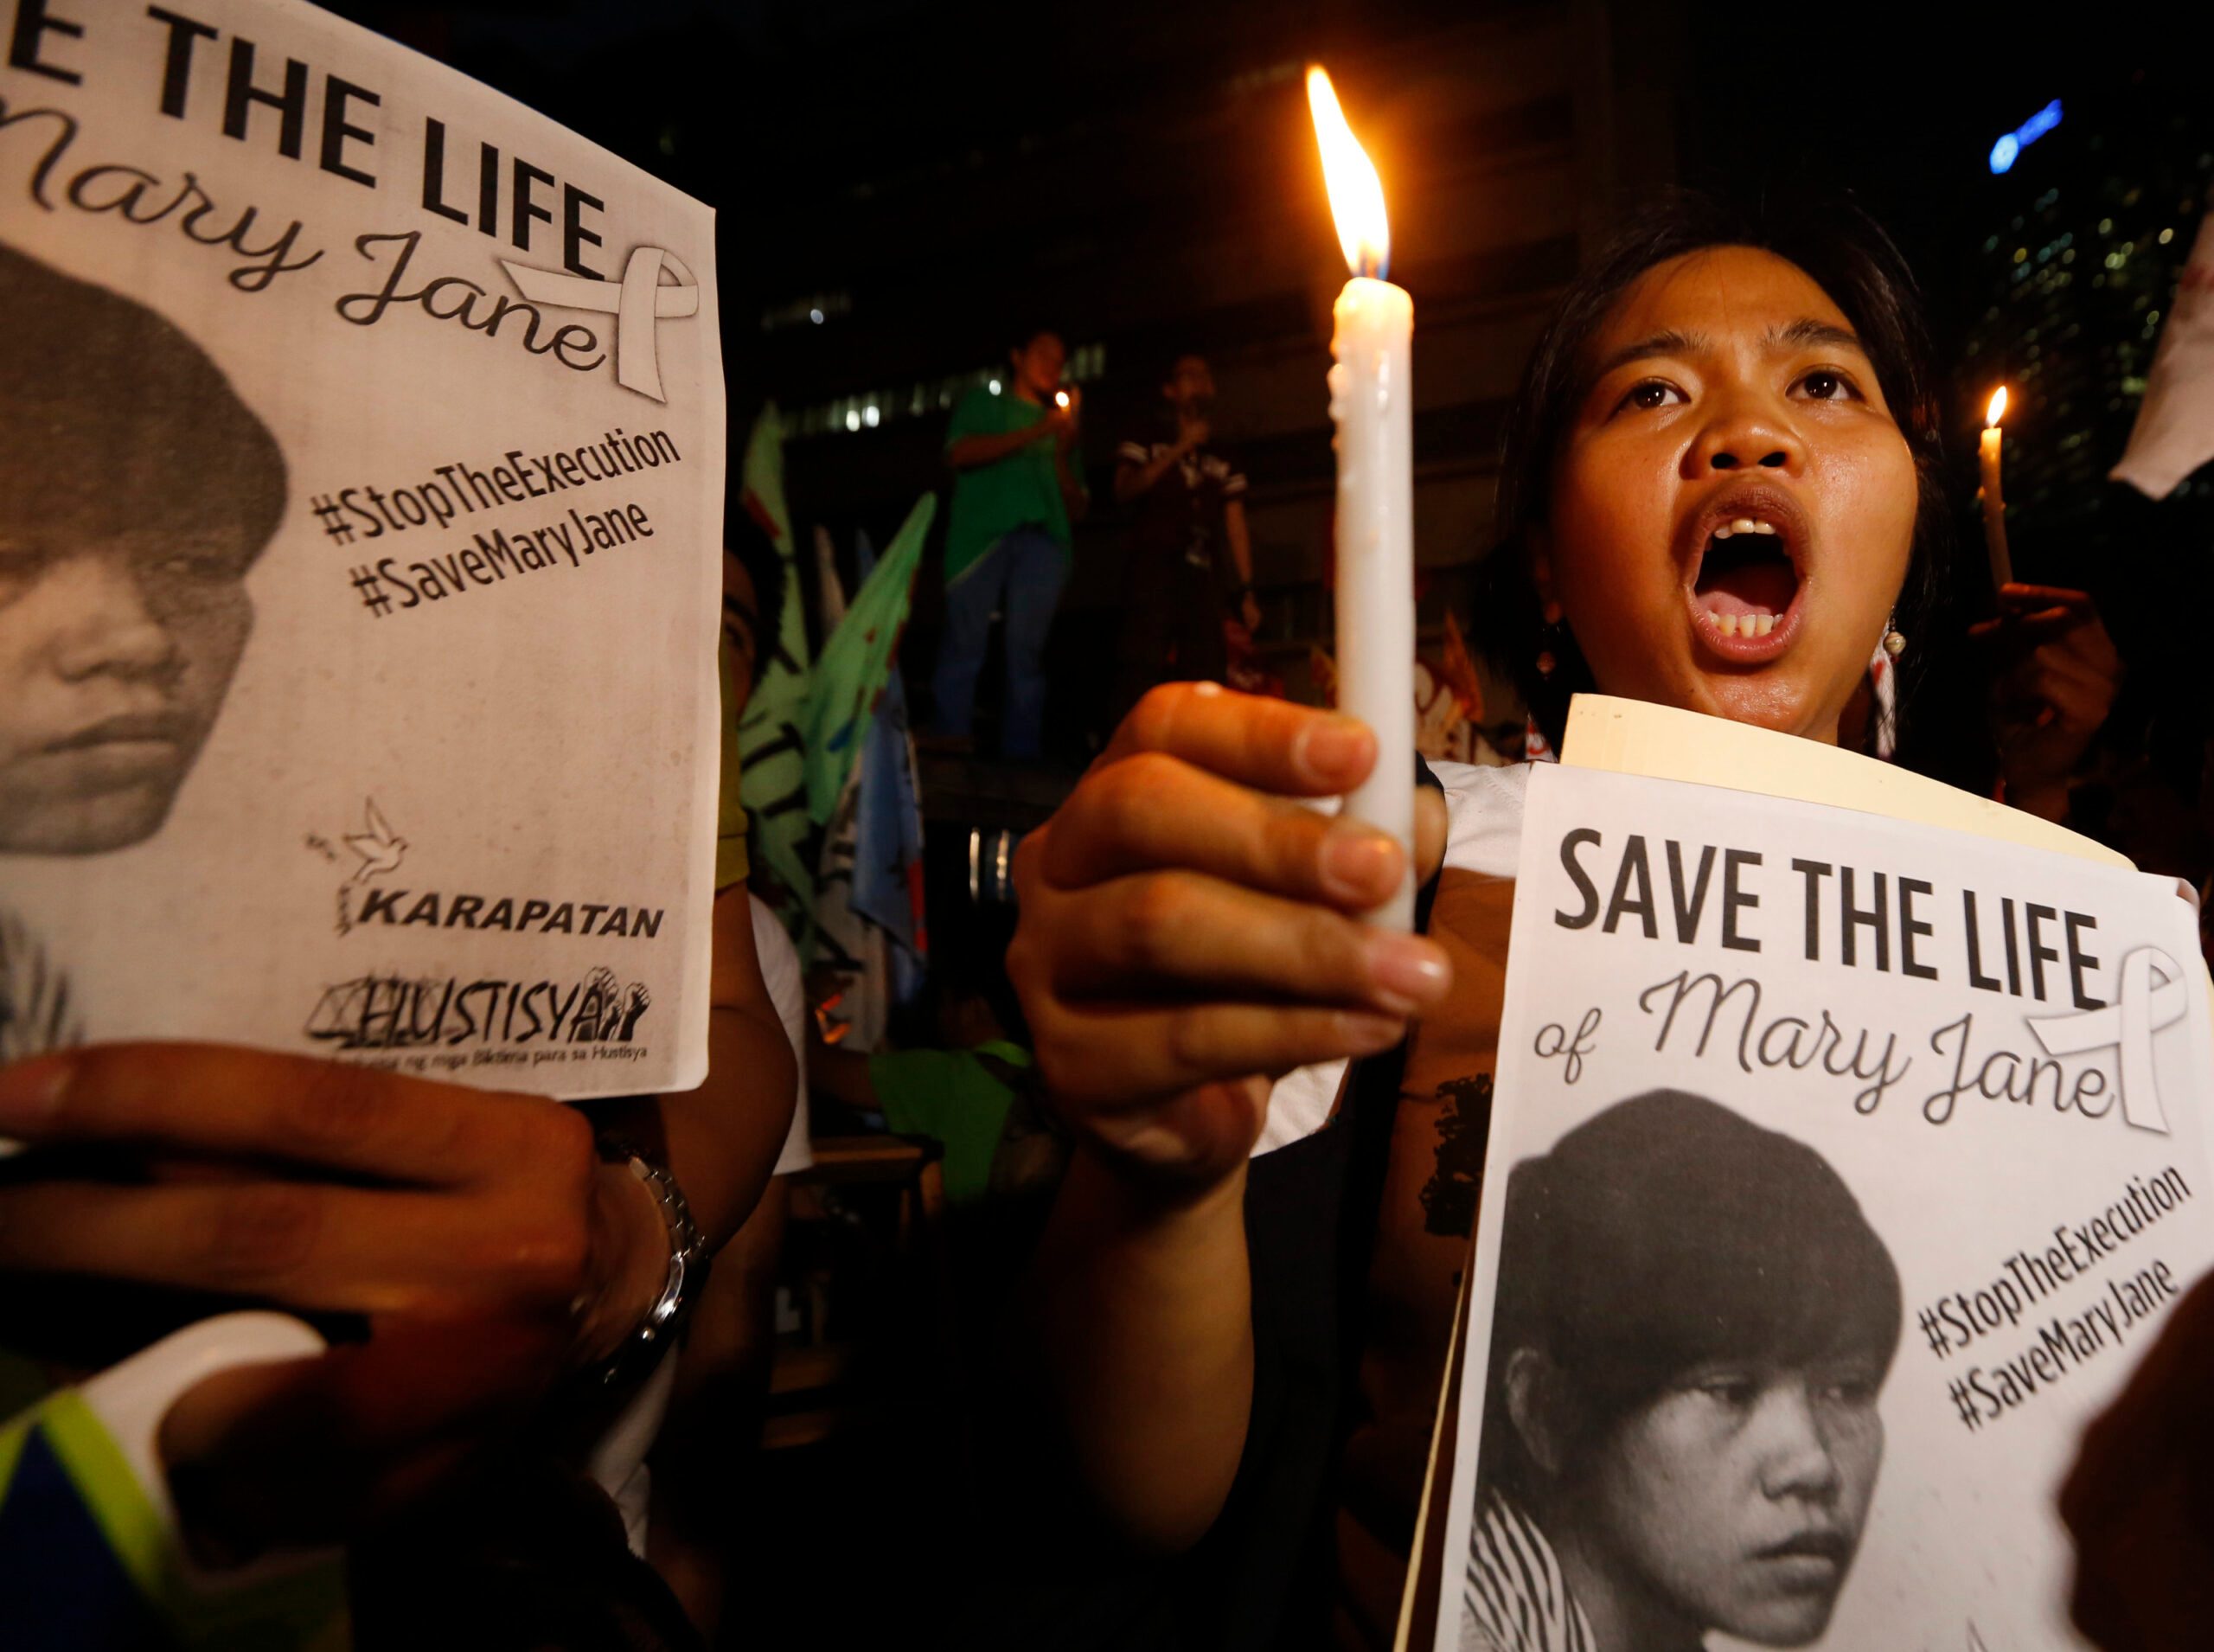 Australia, EU, France urge Indonesia to cancel executions – statement